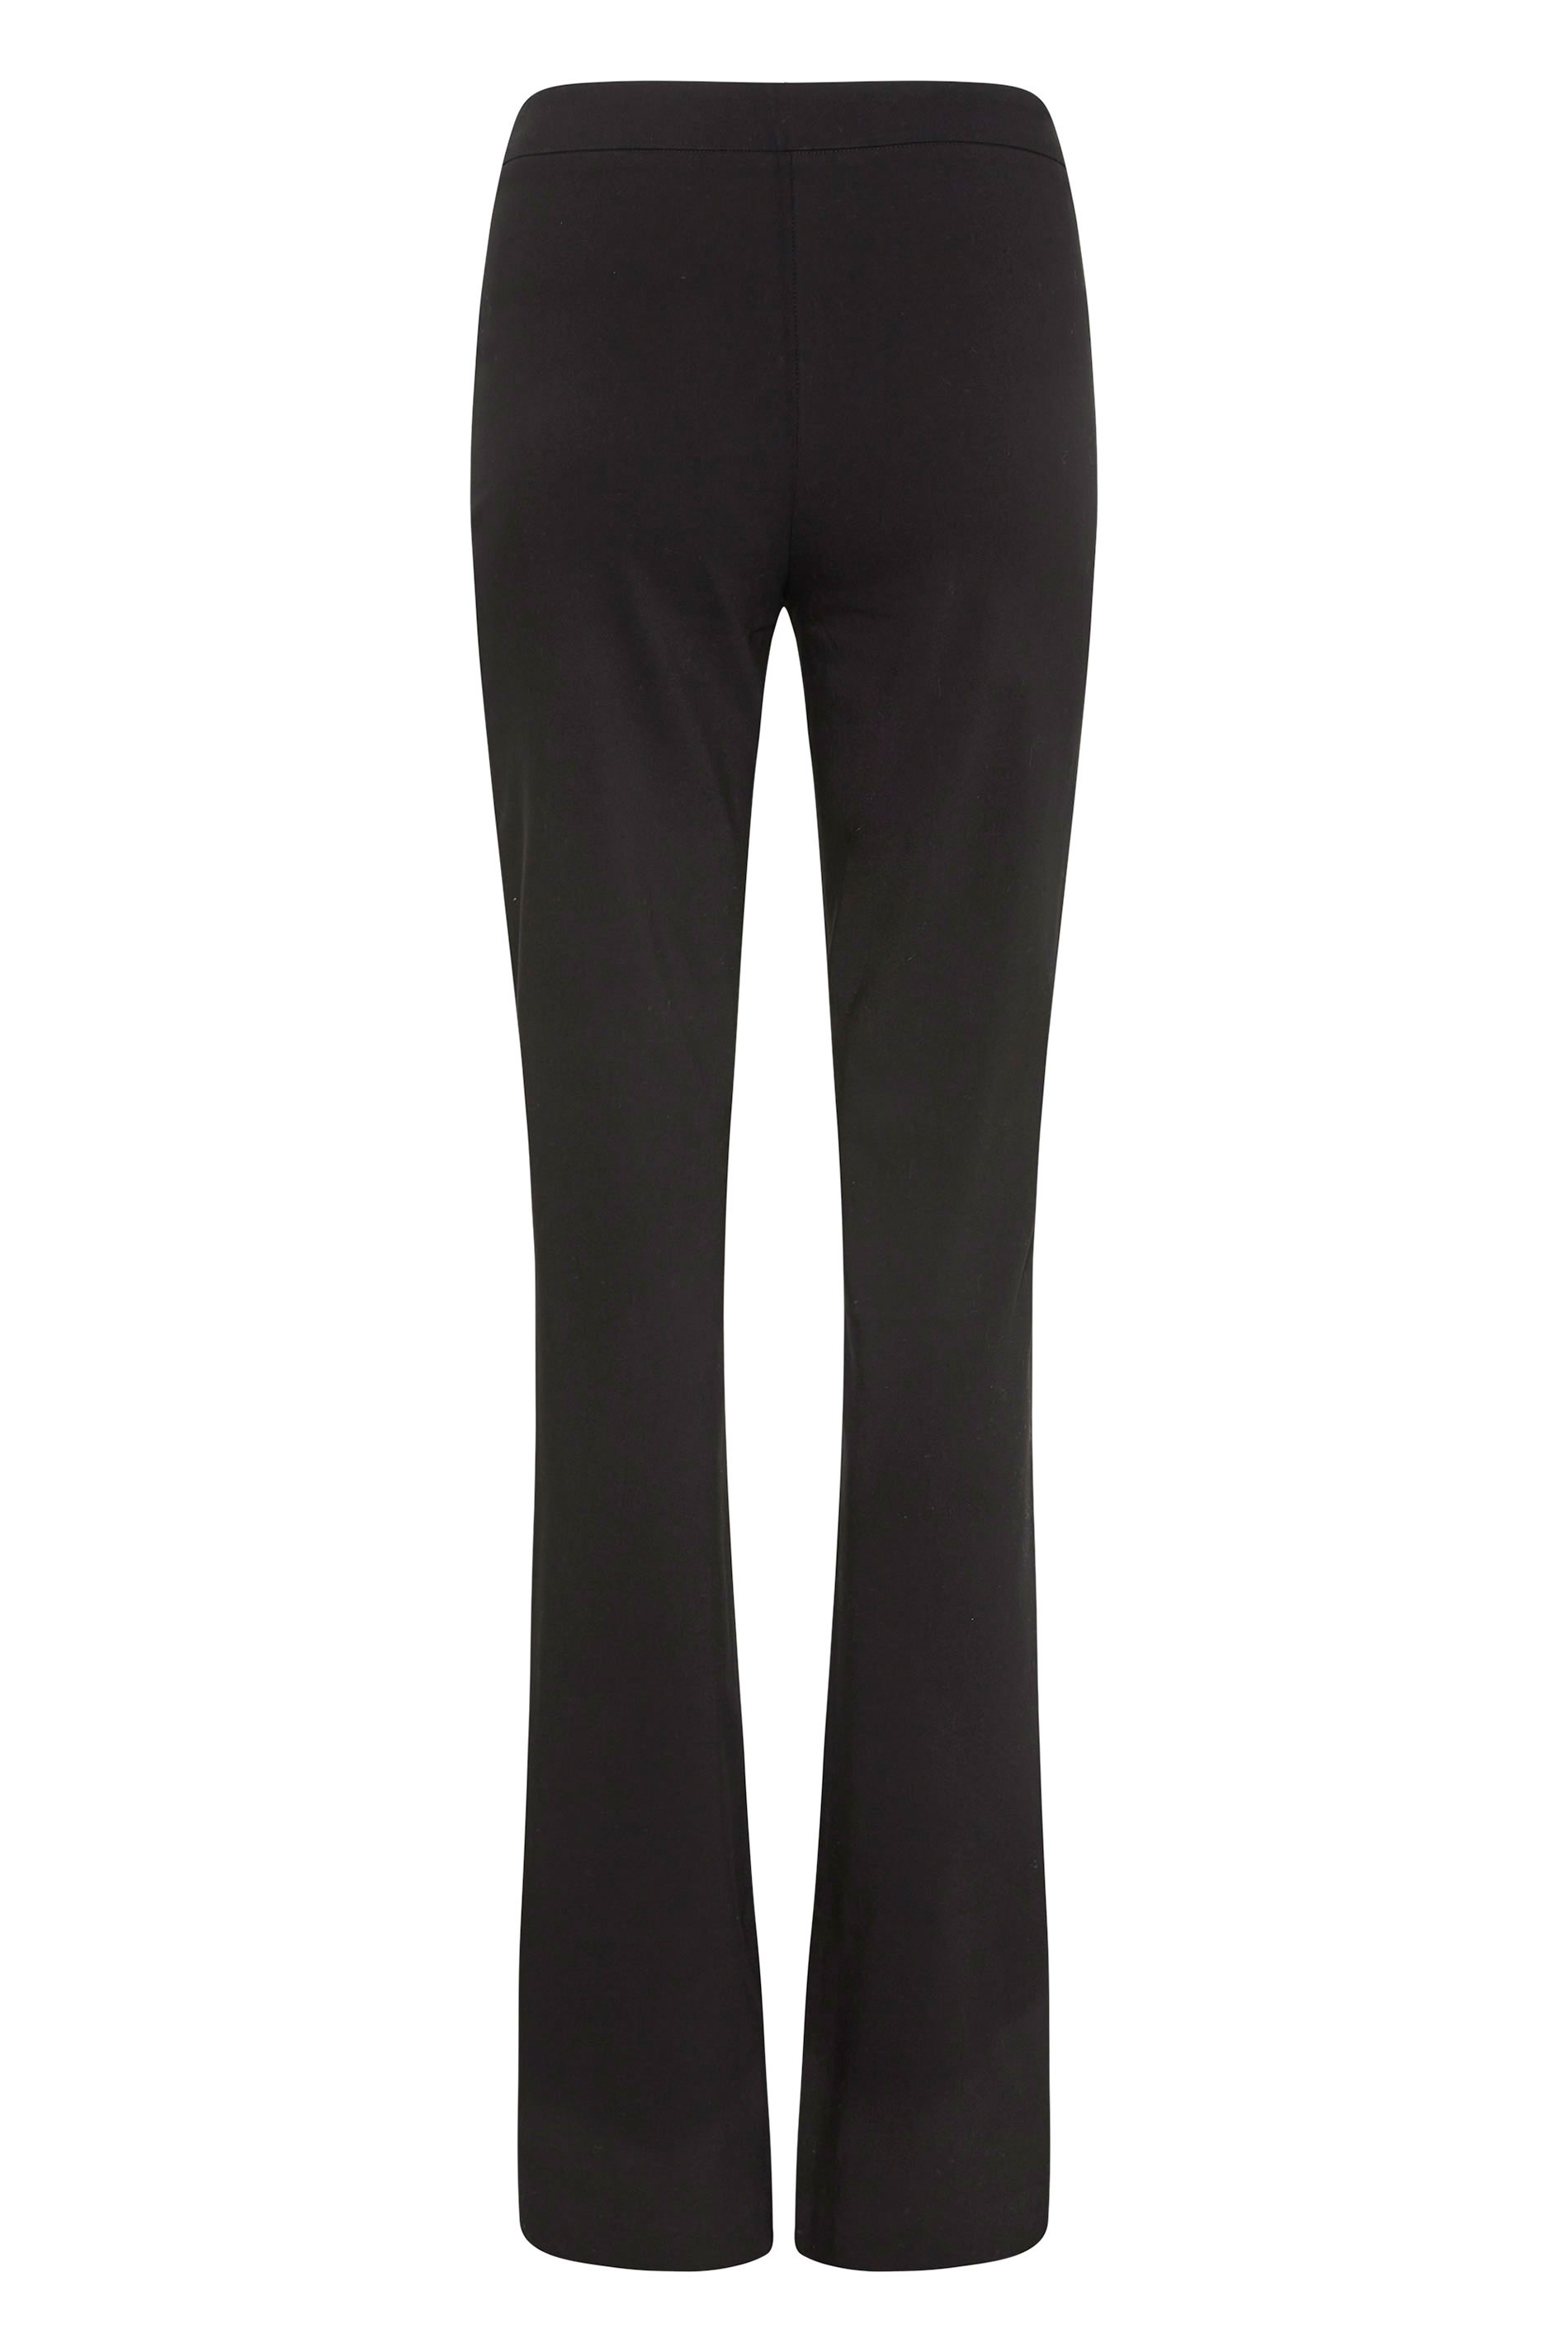 LTS Tall Women's Black Stretch Straight Leg Trousers | Long Tall Sally 3